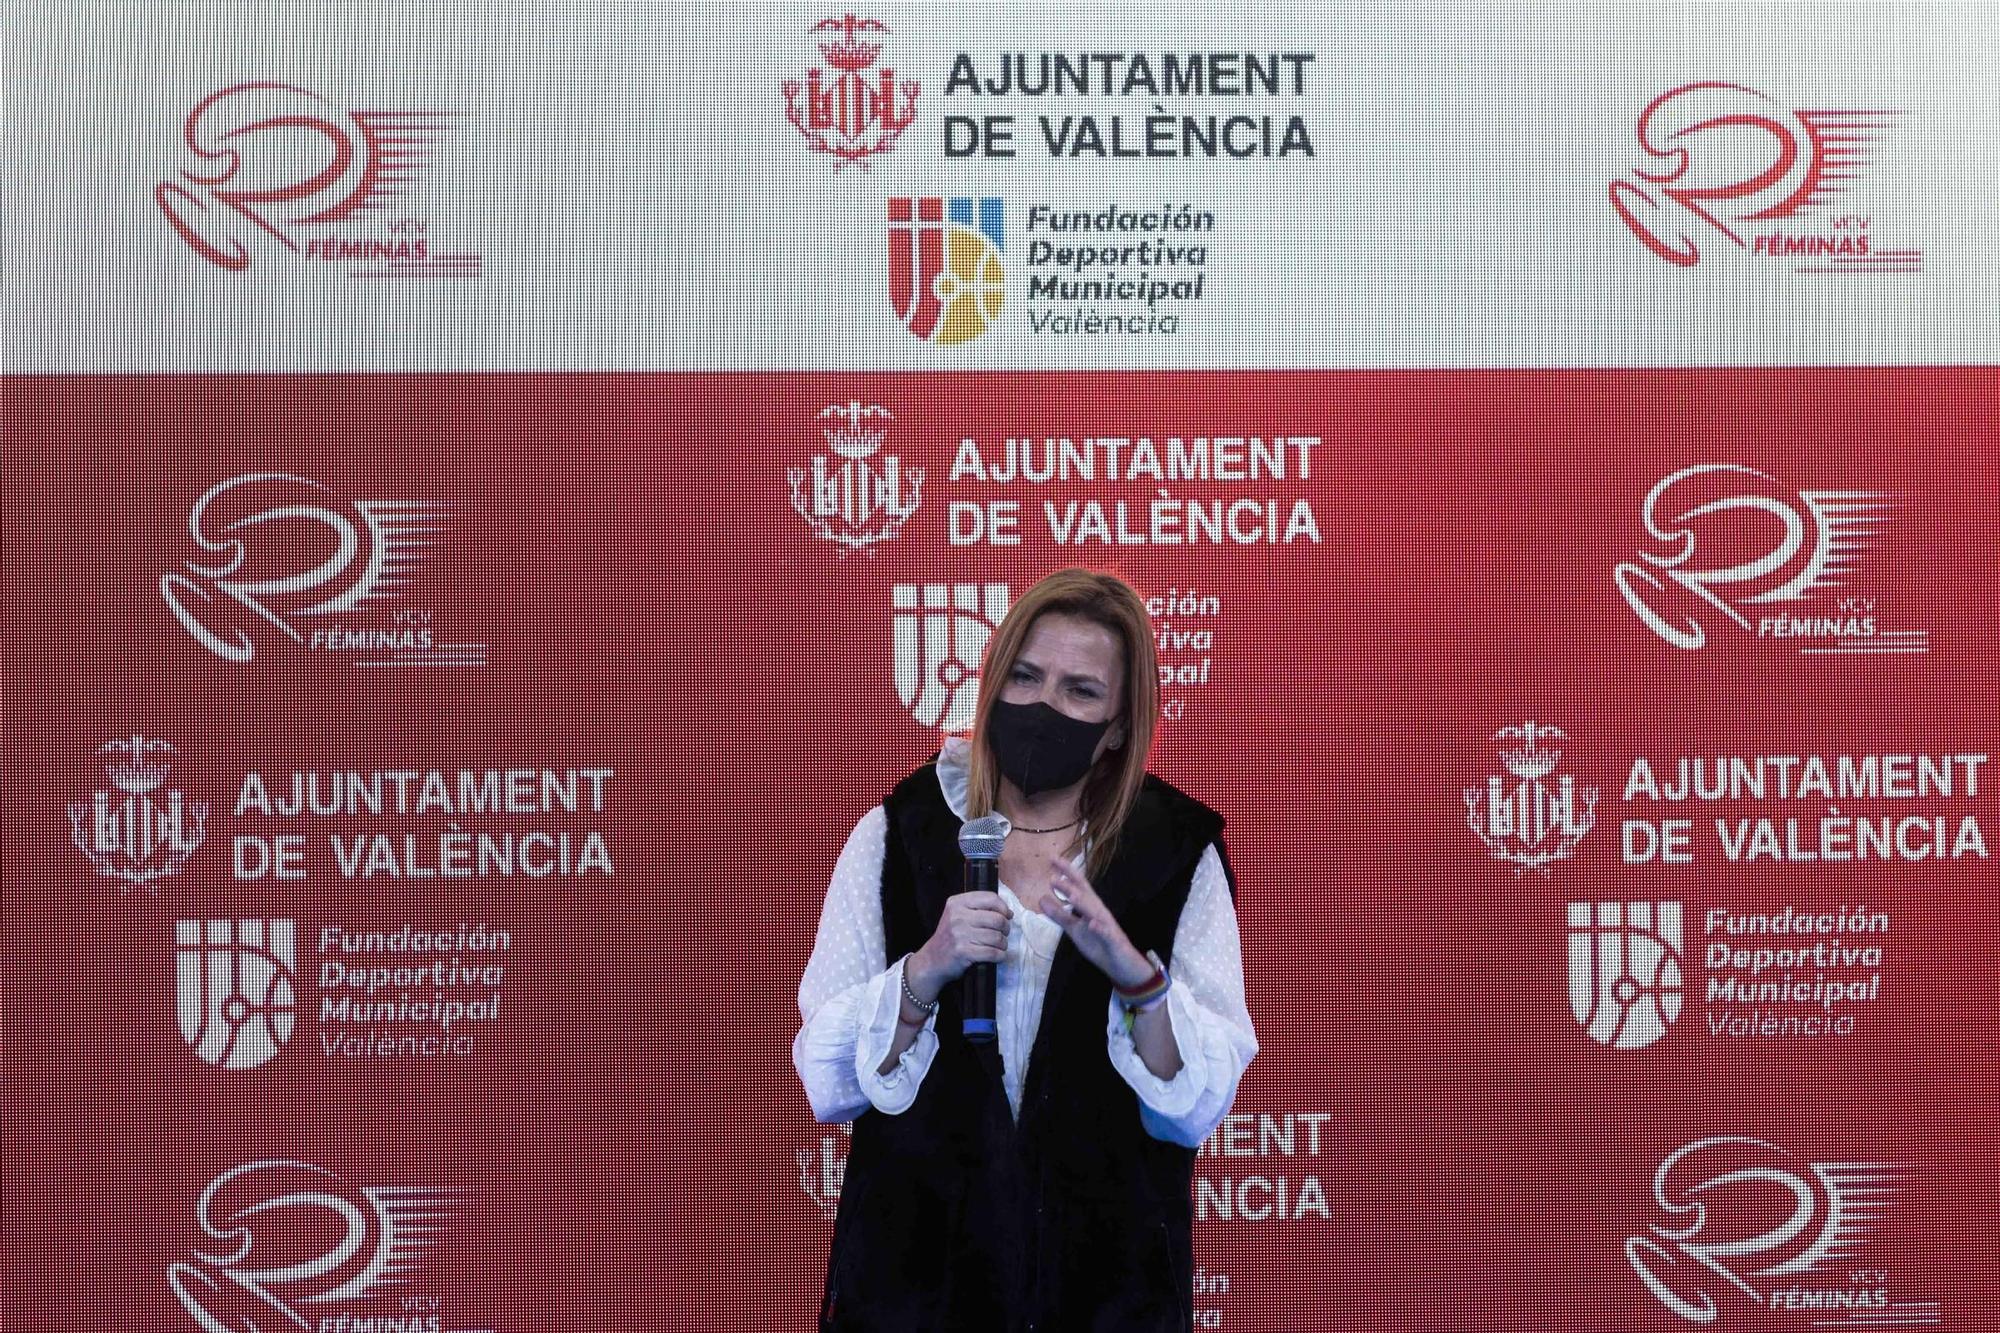 Presentación de la Volta a la Comunitat Valenciana